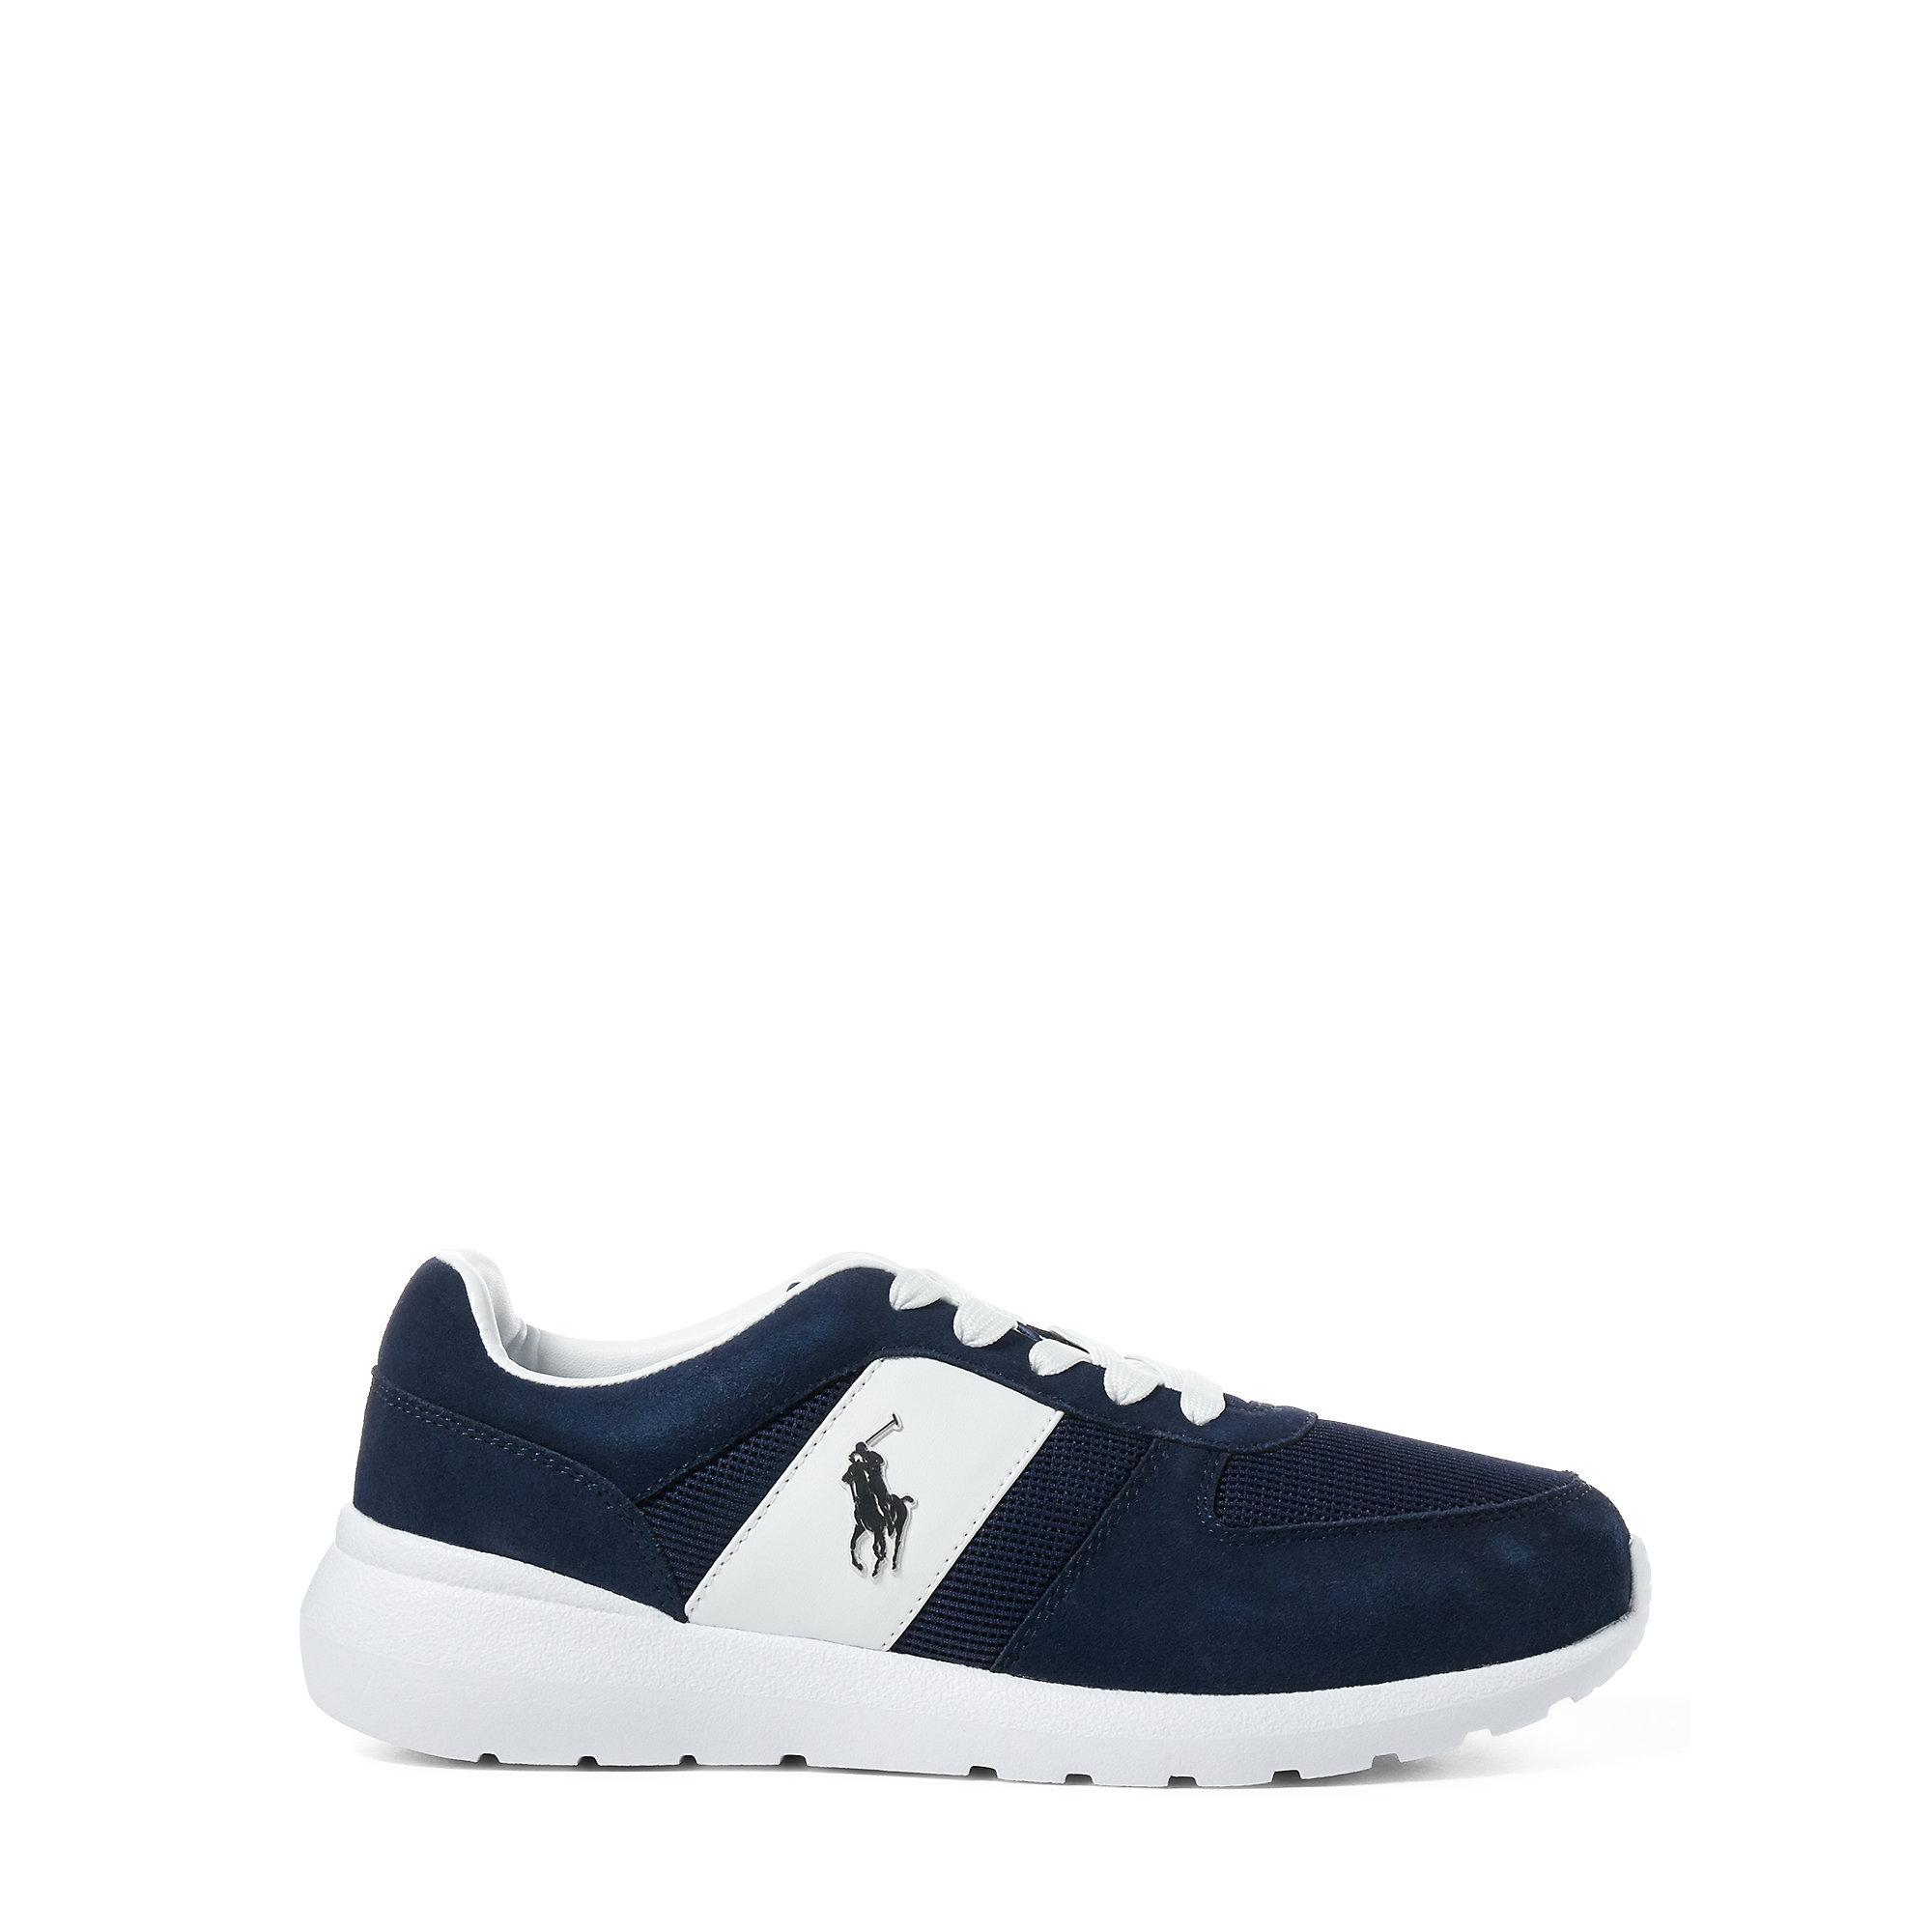 Polo Ralph Lauren Cordell Suede Sneaker in Blue for Men - Lyst